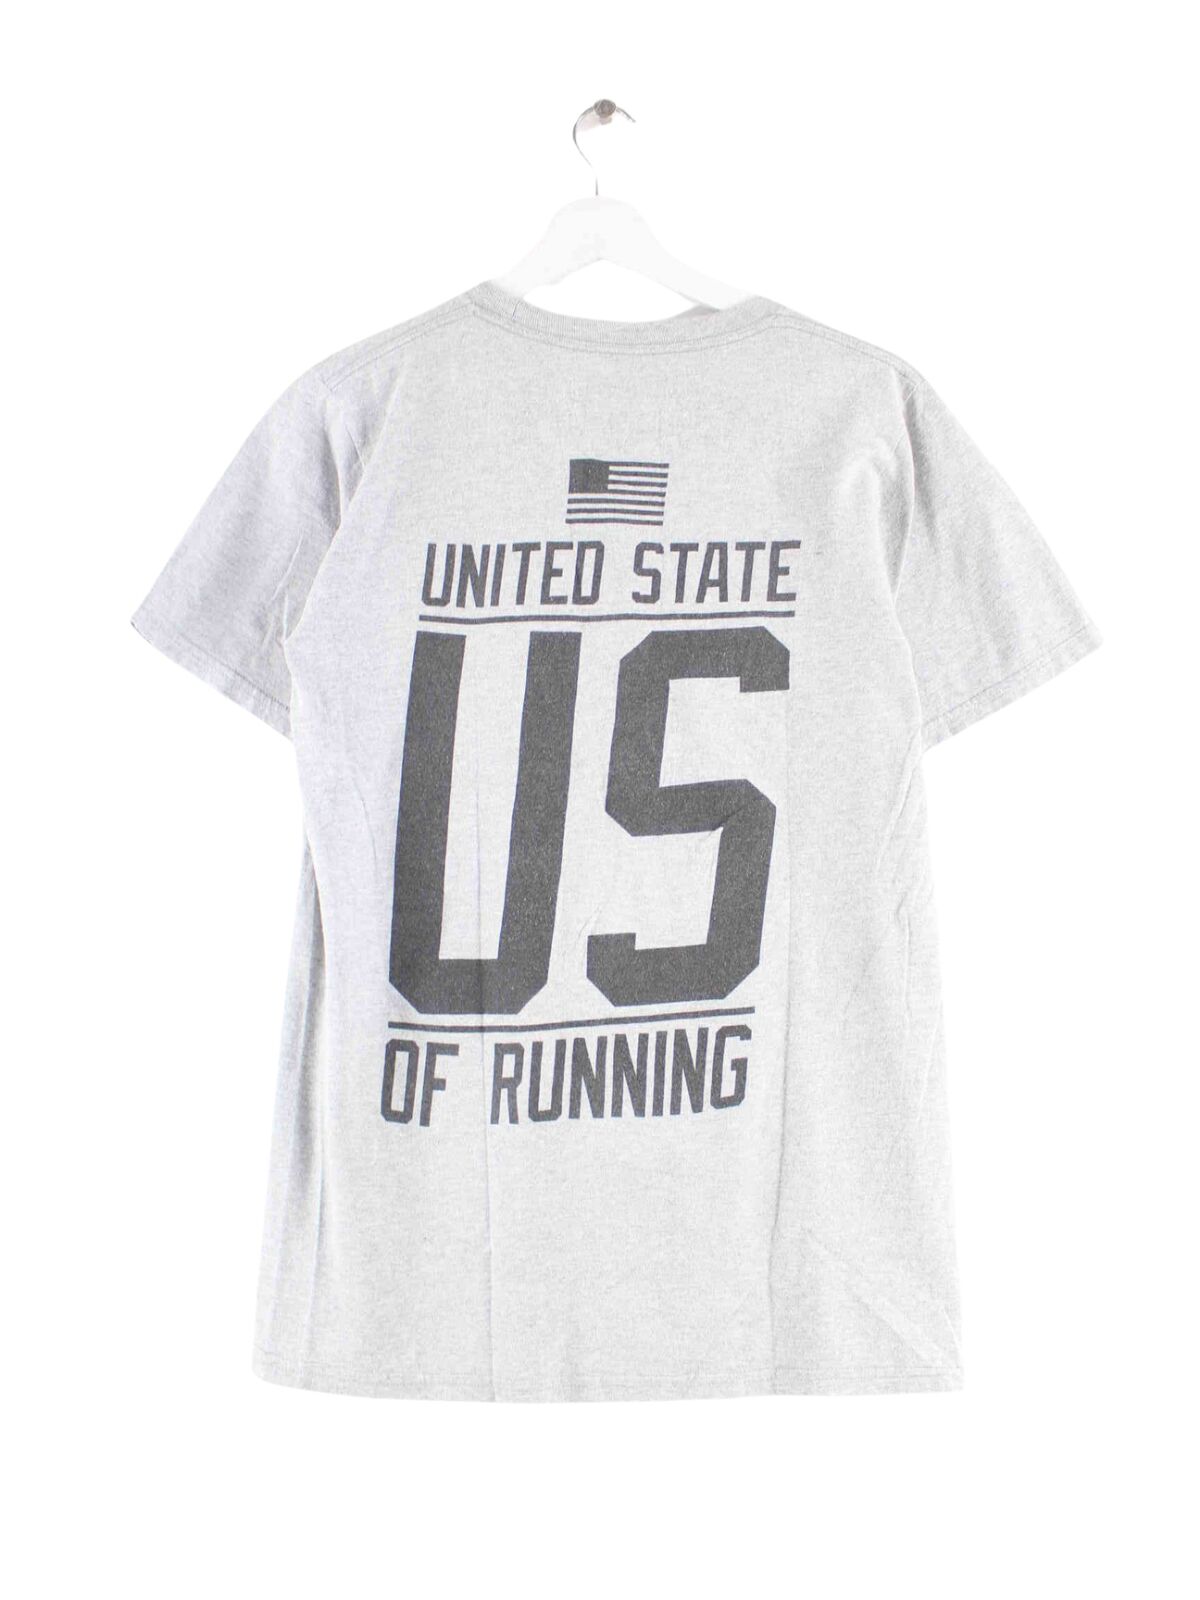 Adidas US Of Running Print T-Shirt Grau S (back image)